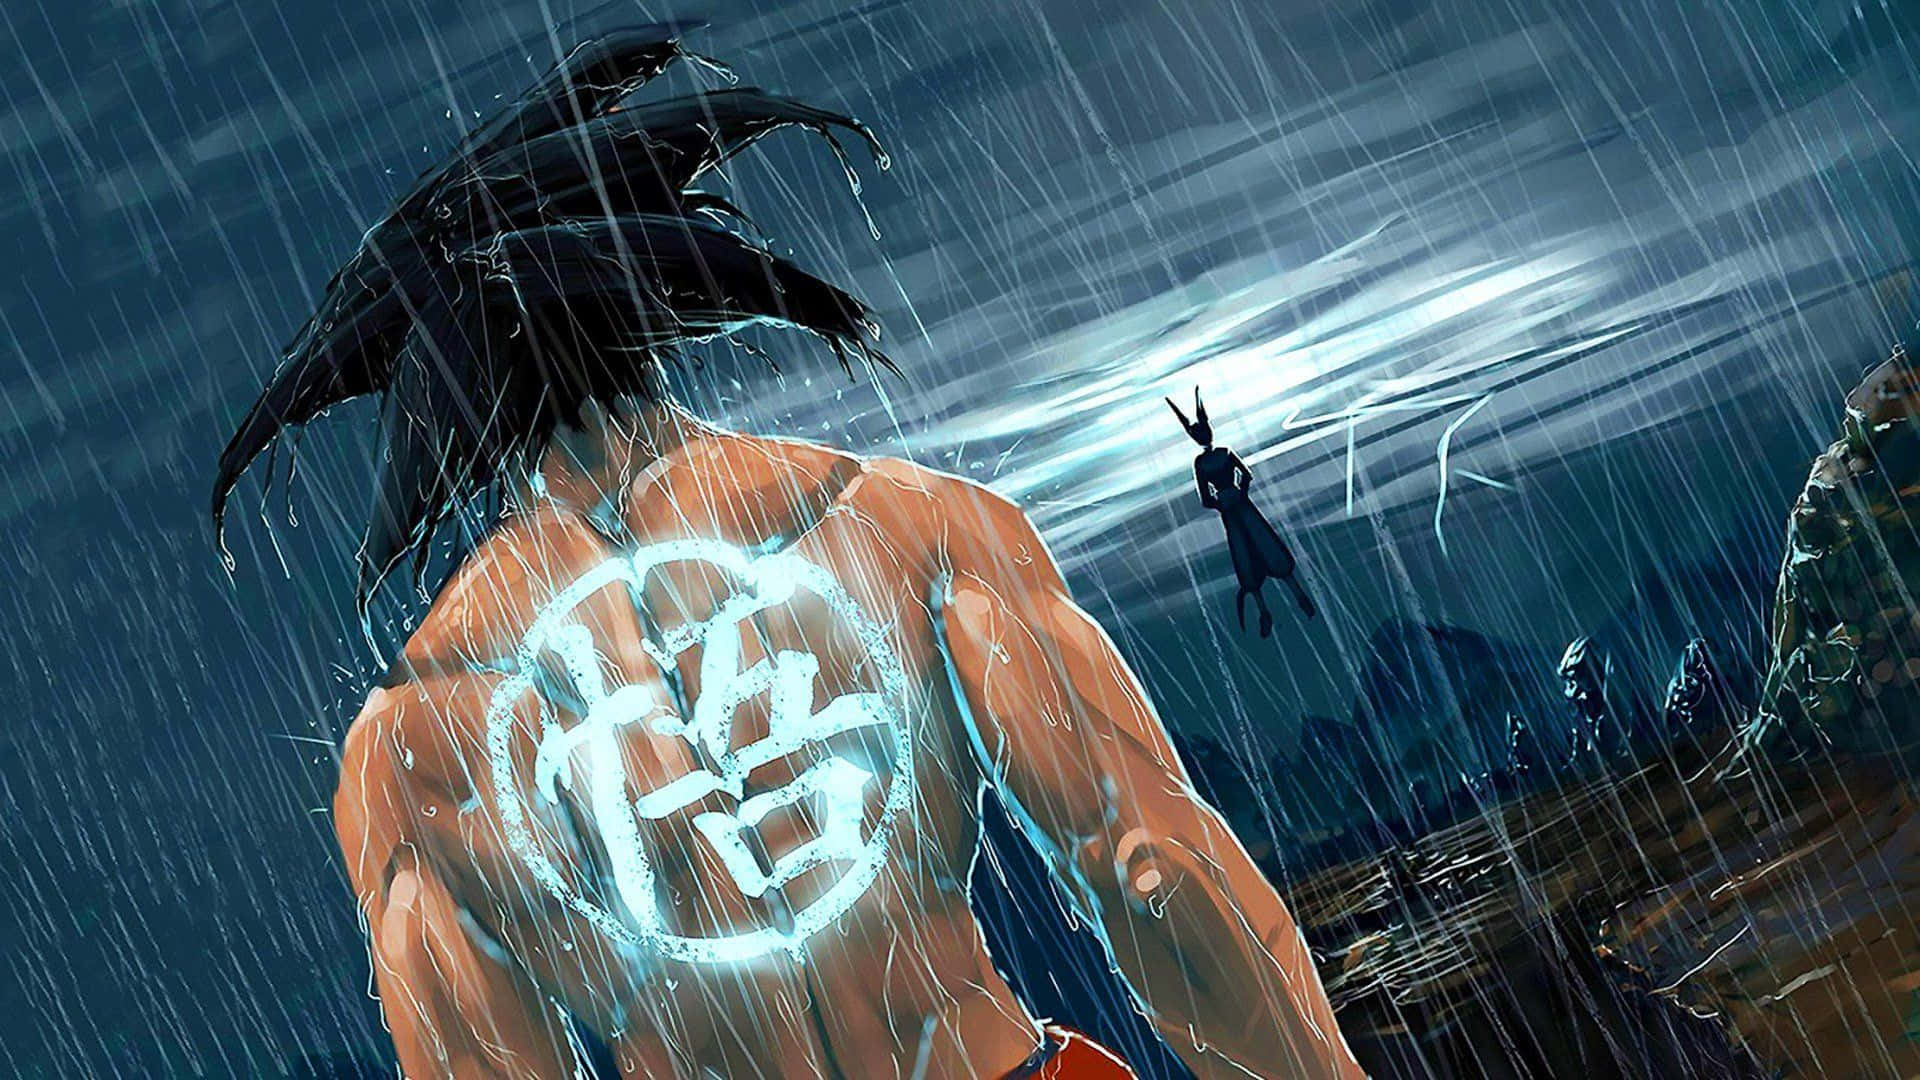 "Broly, the legendary Super Saiyan!" Wallpaper